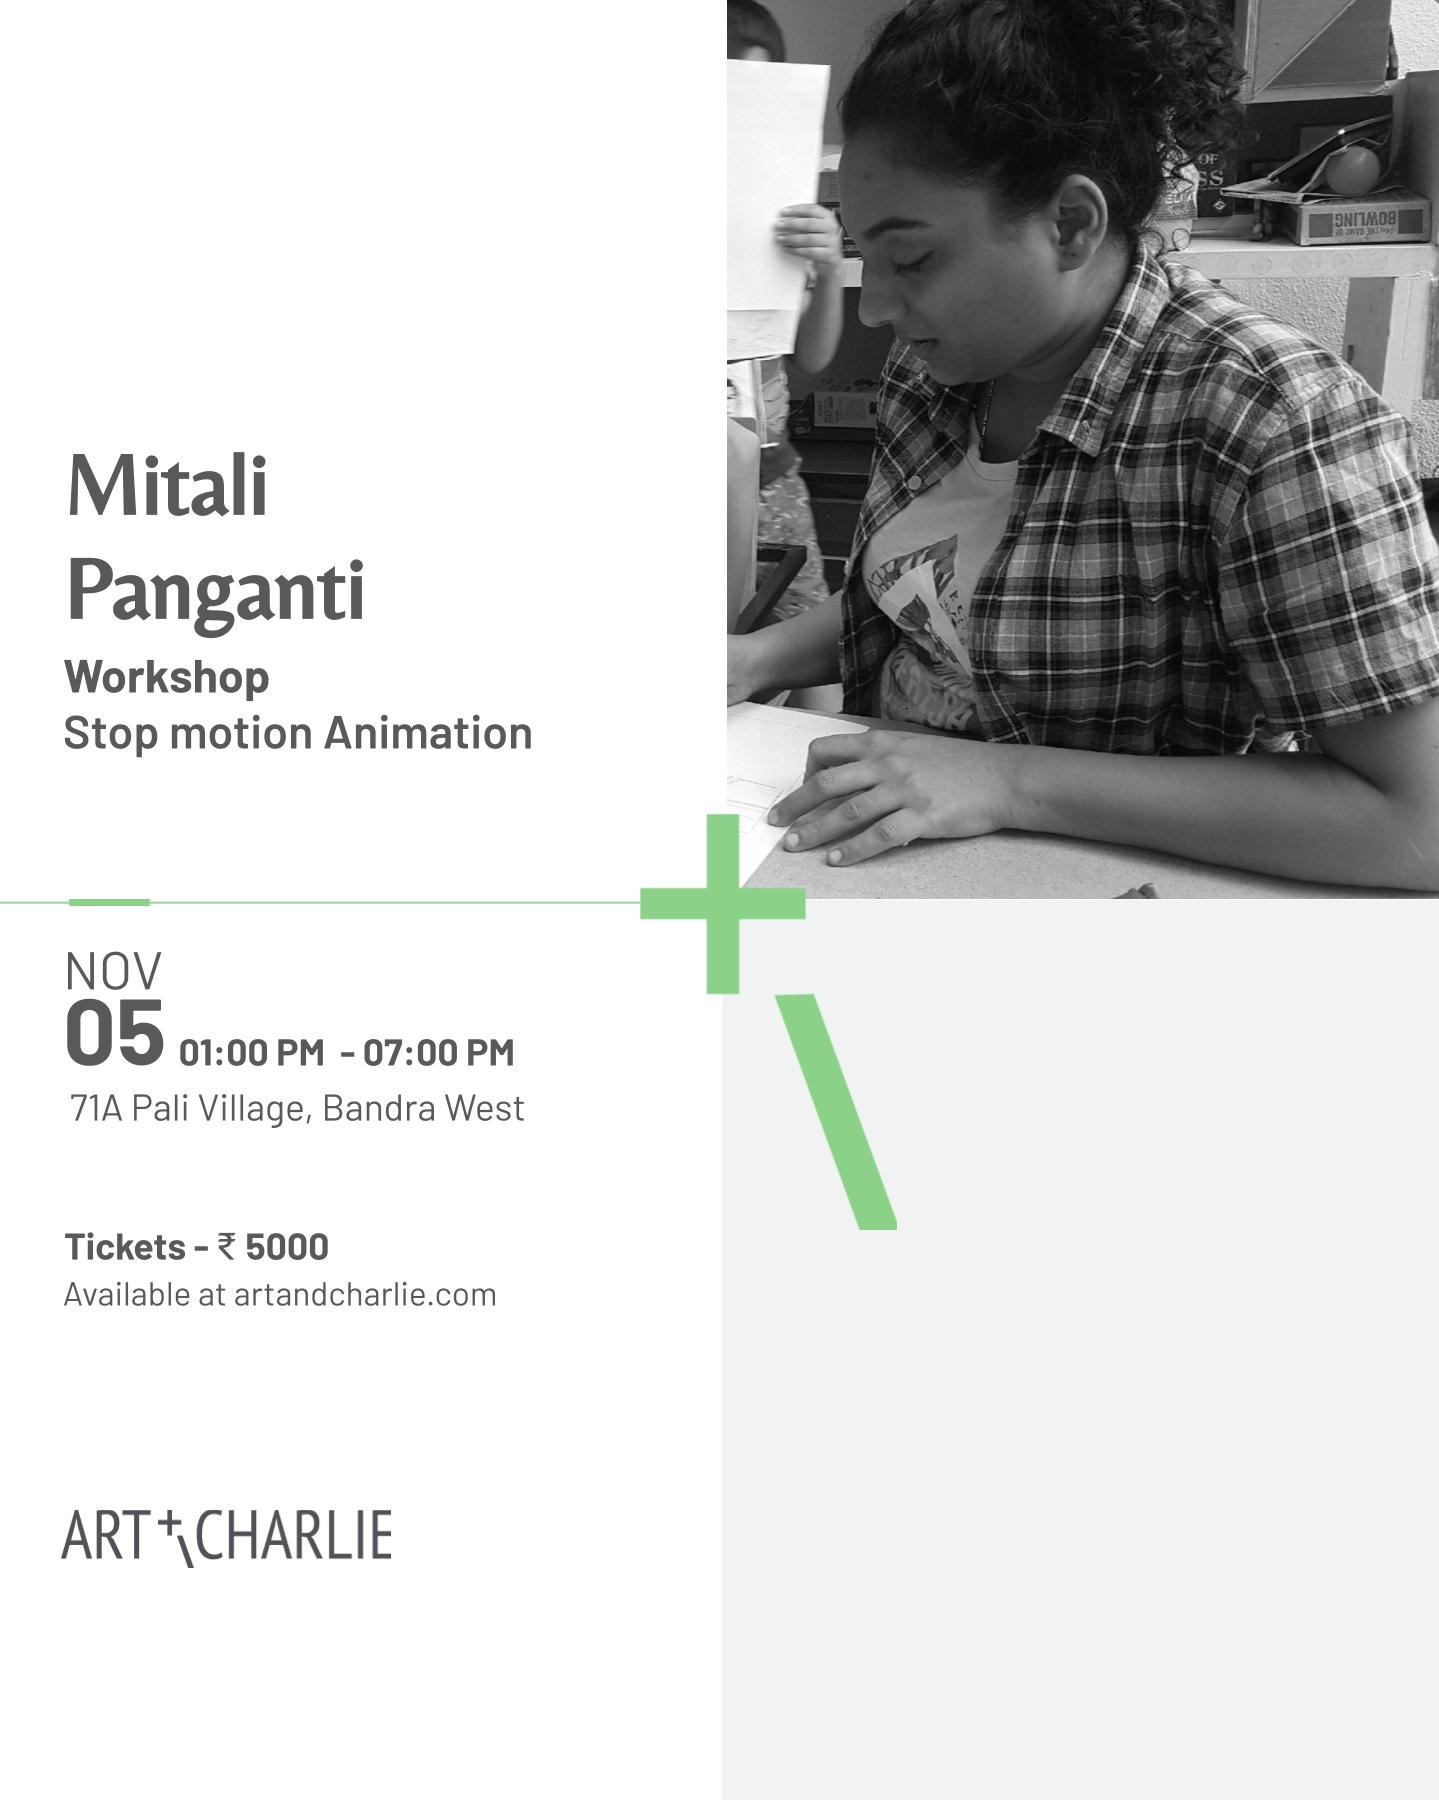 Ticket - Mitali Panganti - Stop motion Animation Workshop - Nov 05th - 1PM to 7PM